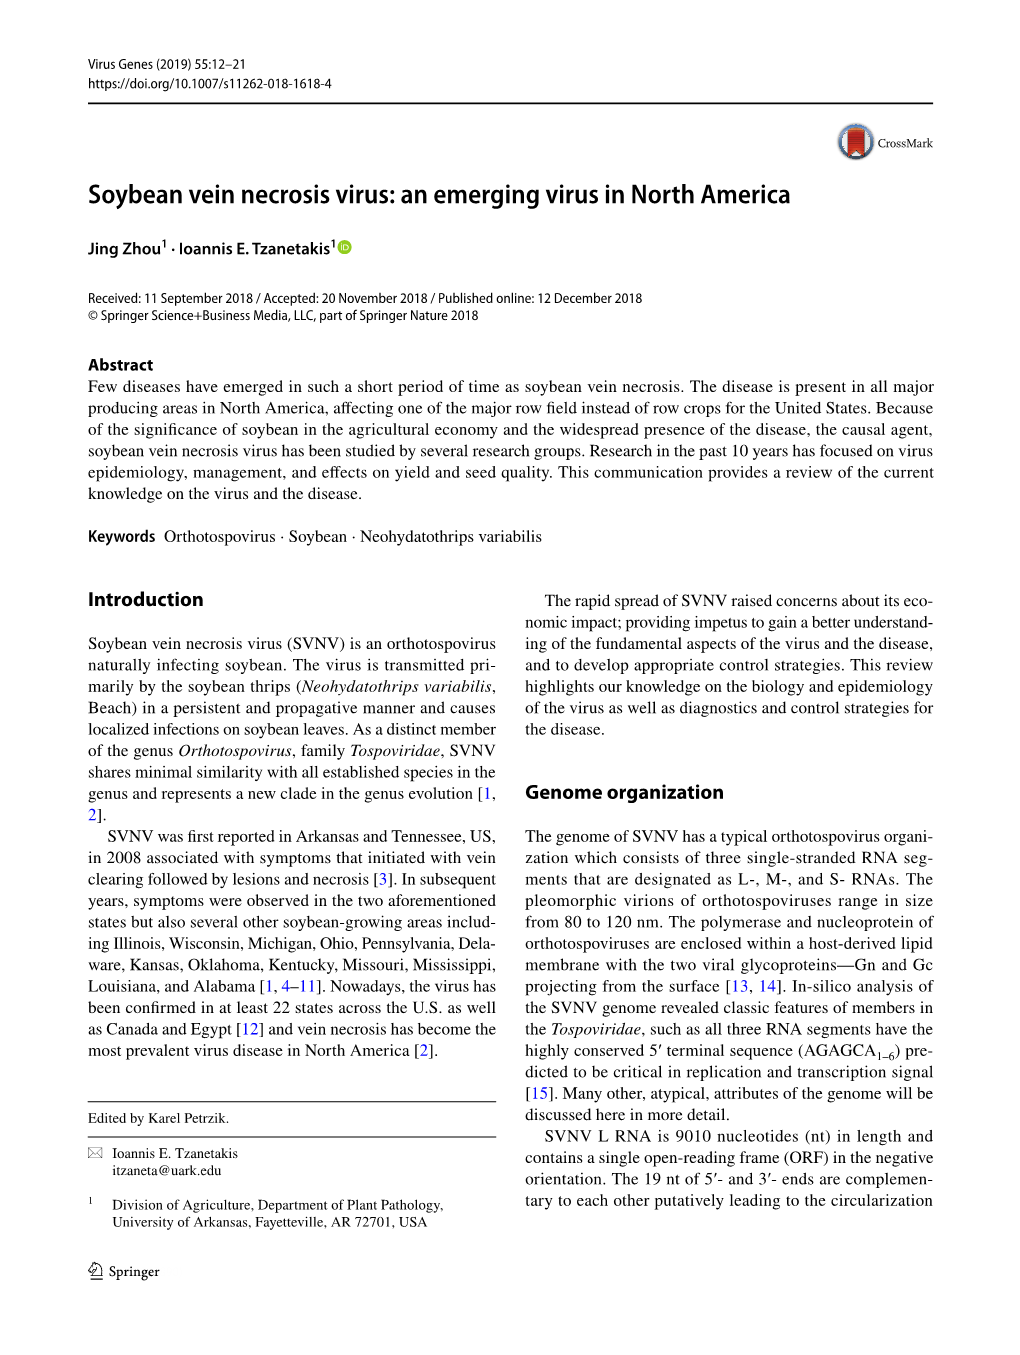 Soybean Vein Necrosis Virus: an Emerging Virus in North America